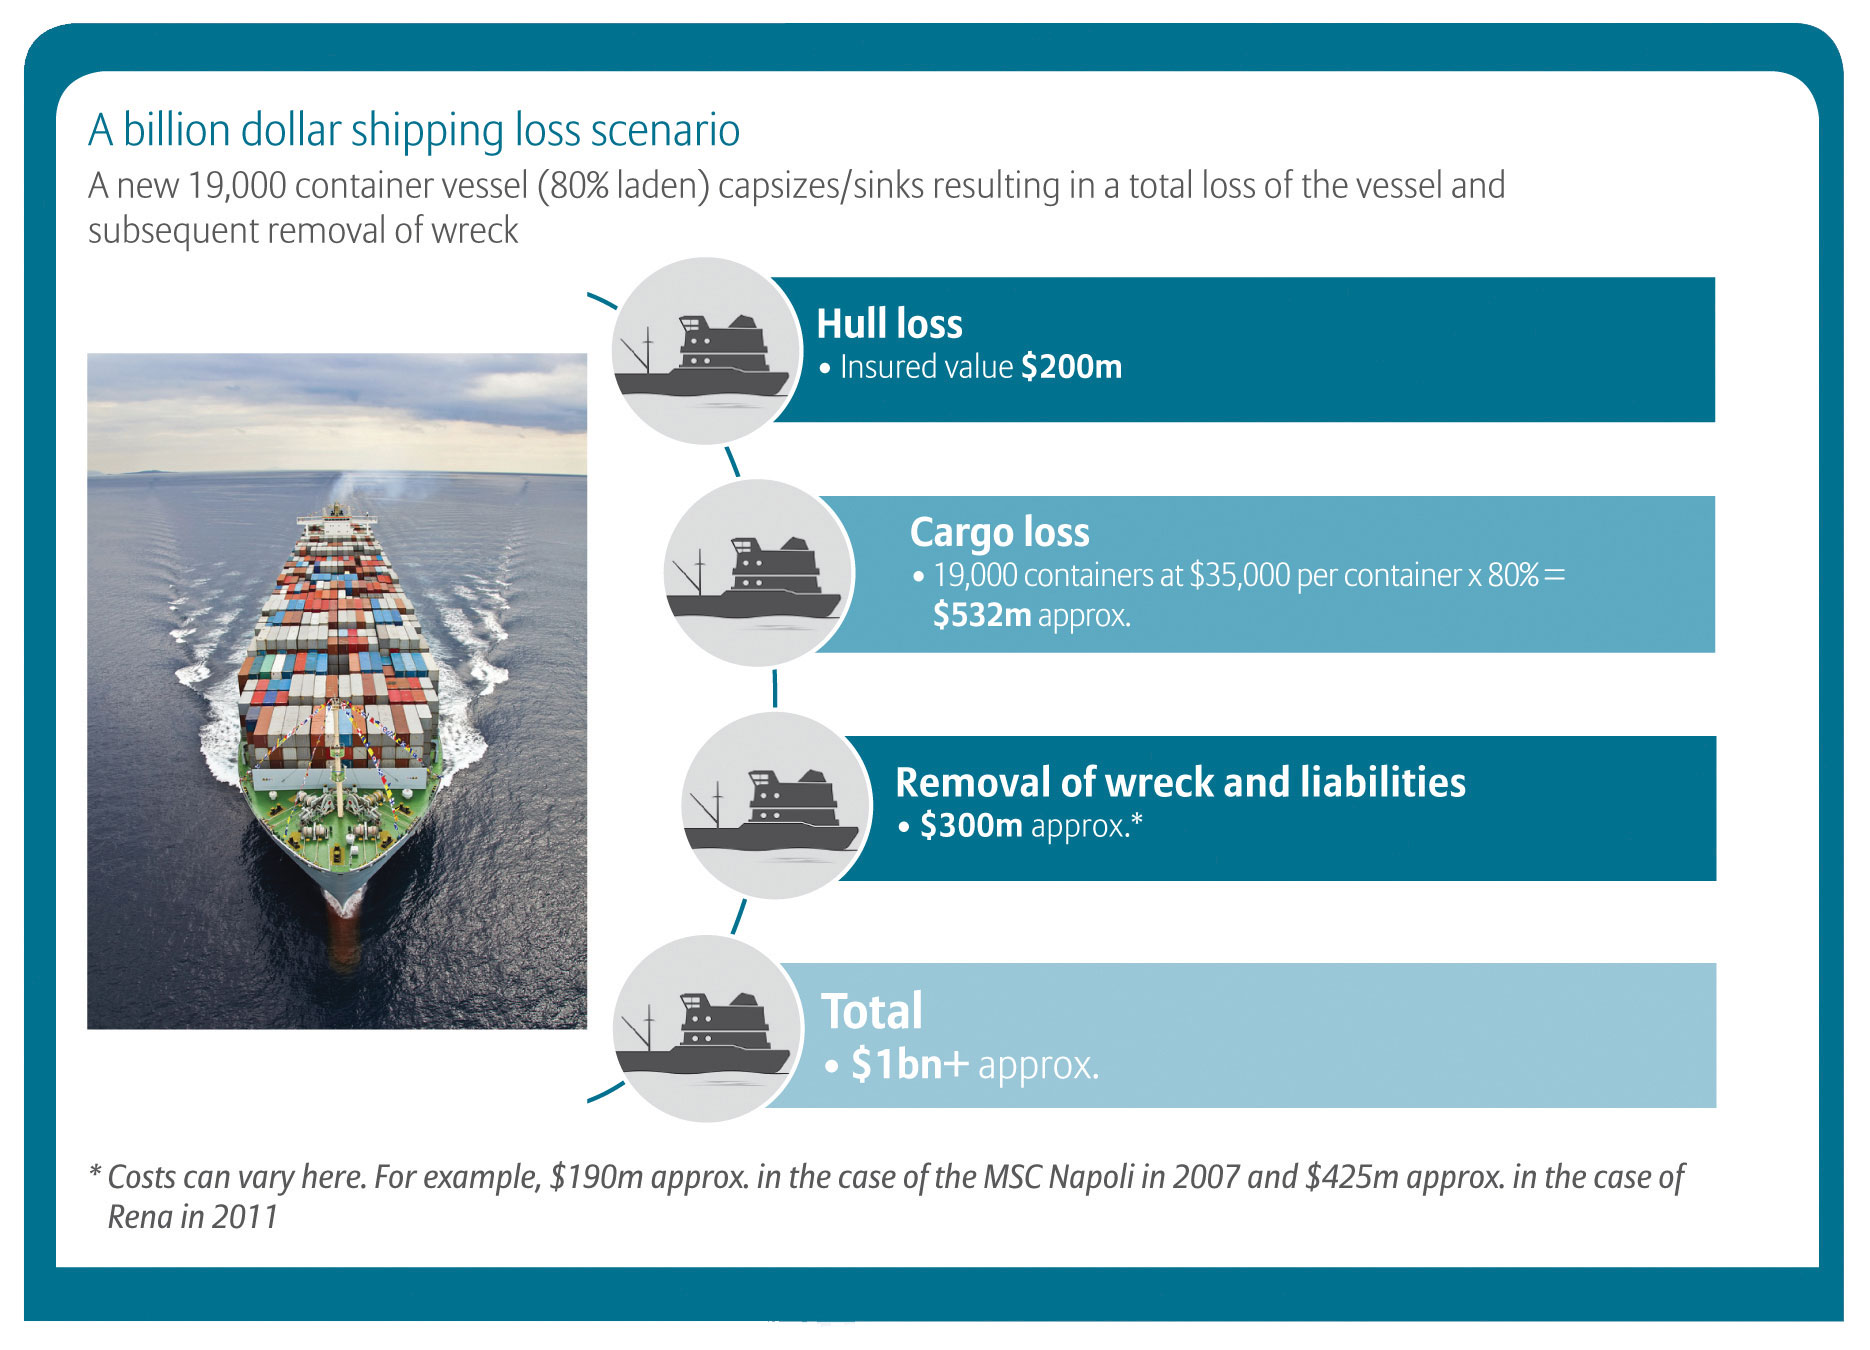 Mega ships: A billion dollar shipping loss scenario